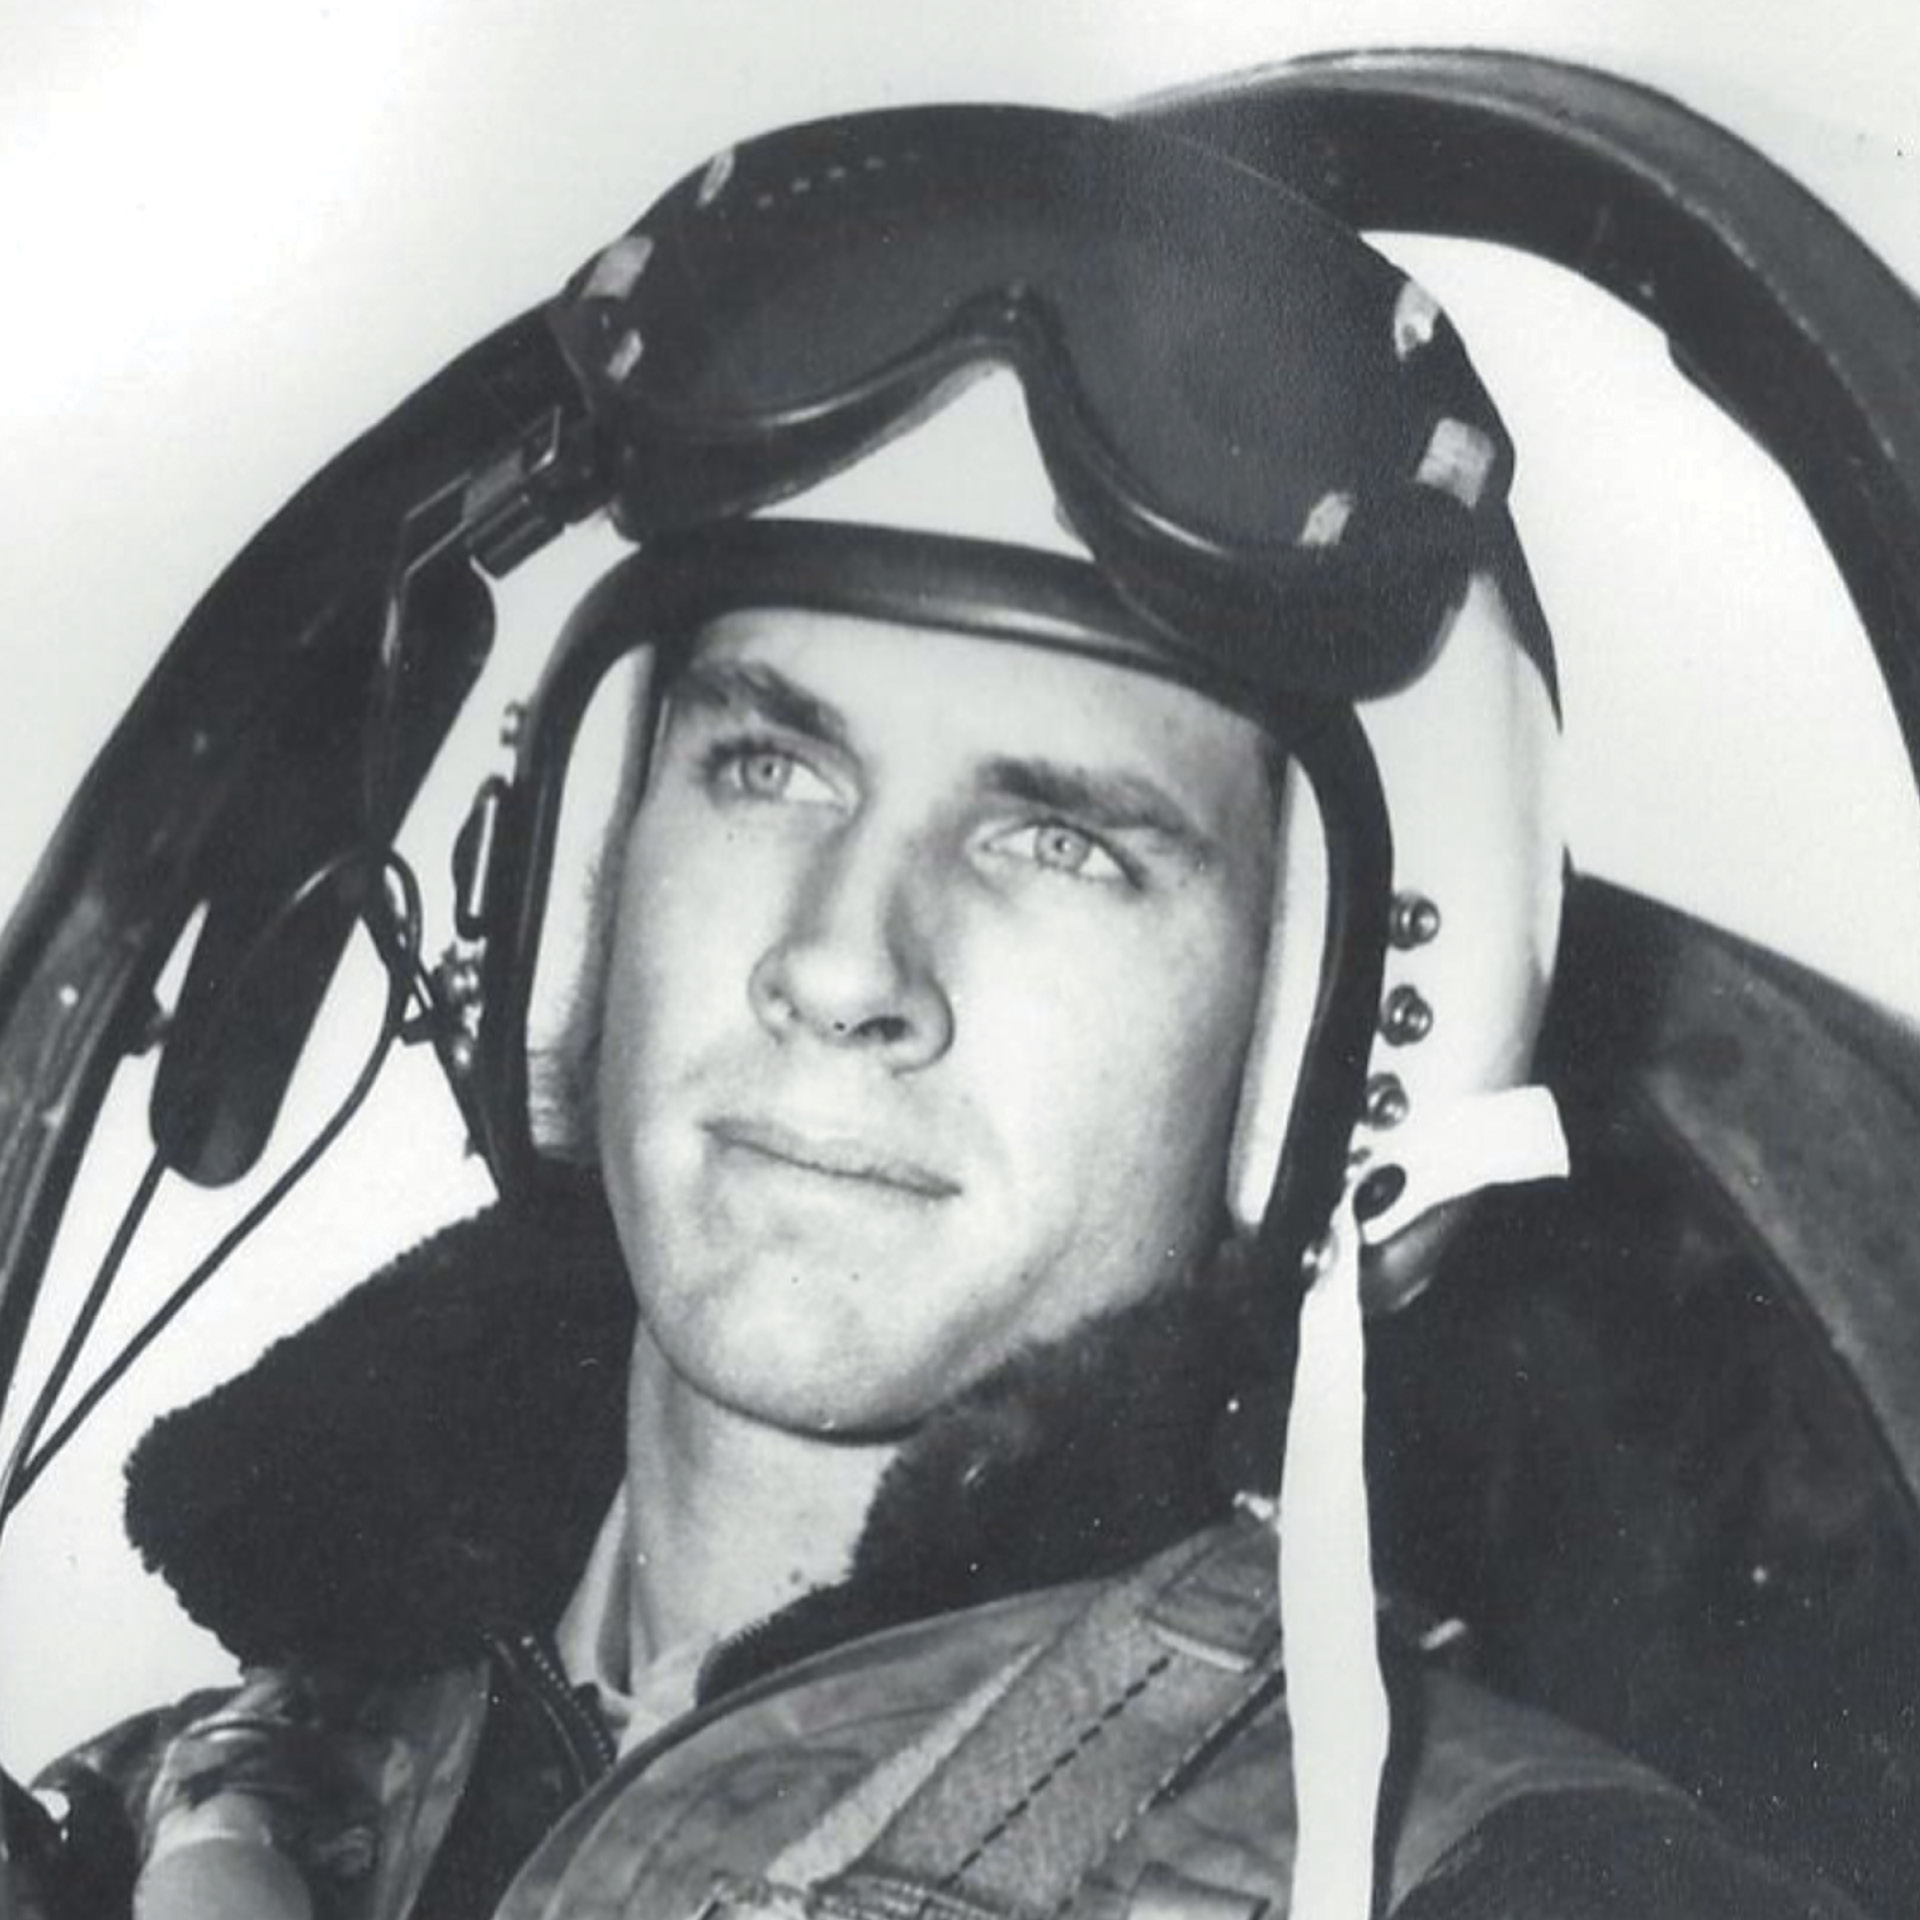 Vintage photo of pilot Thomas Hudner, Jr., circa 1950